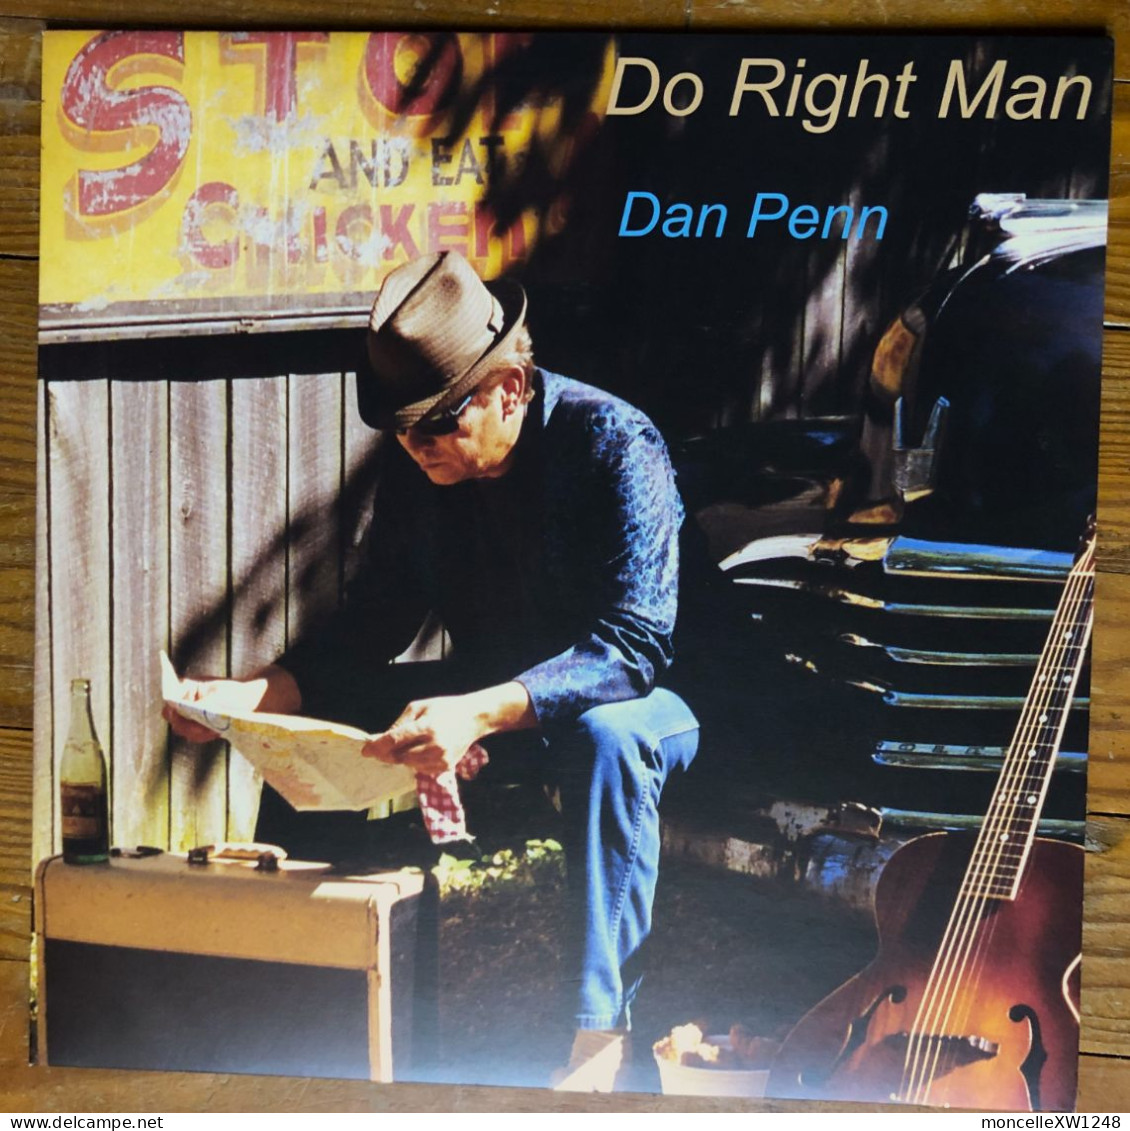 Dan Penn - 33 T LP Do Right Man (2013) - Country & Folk